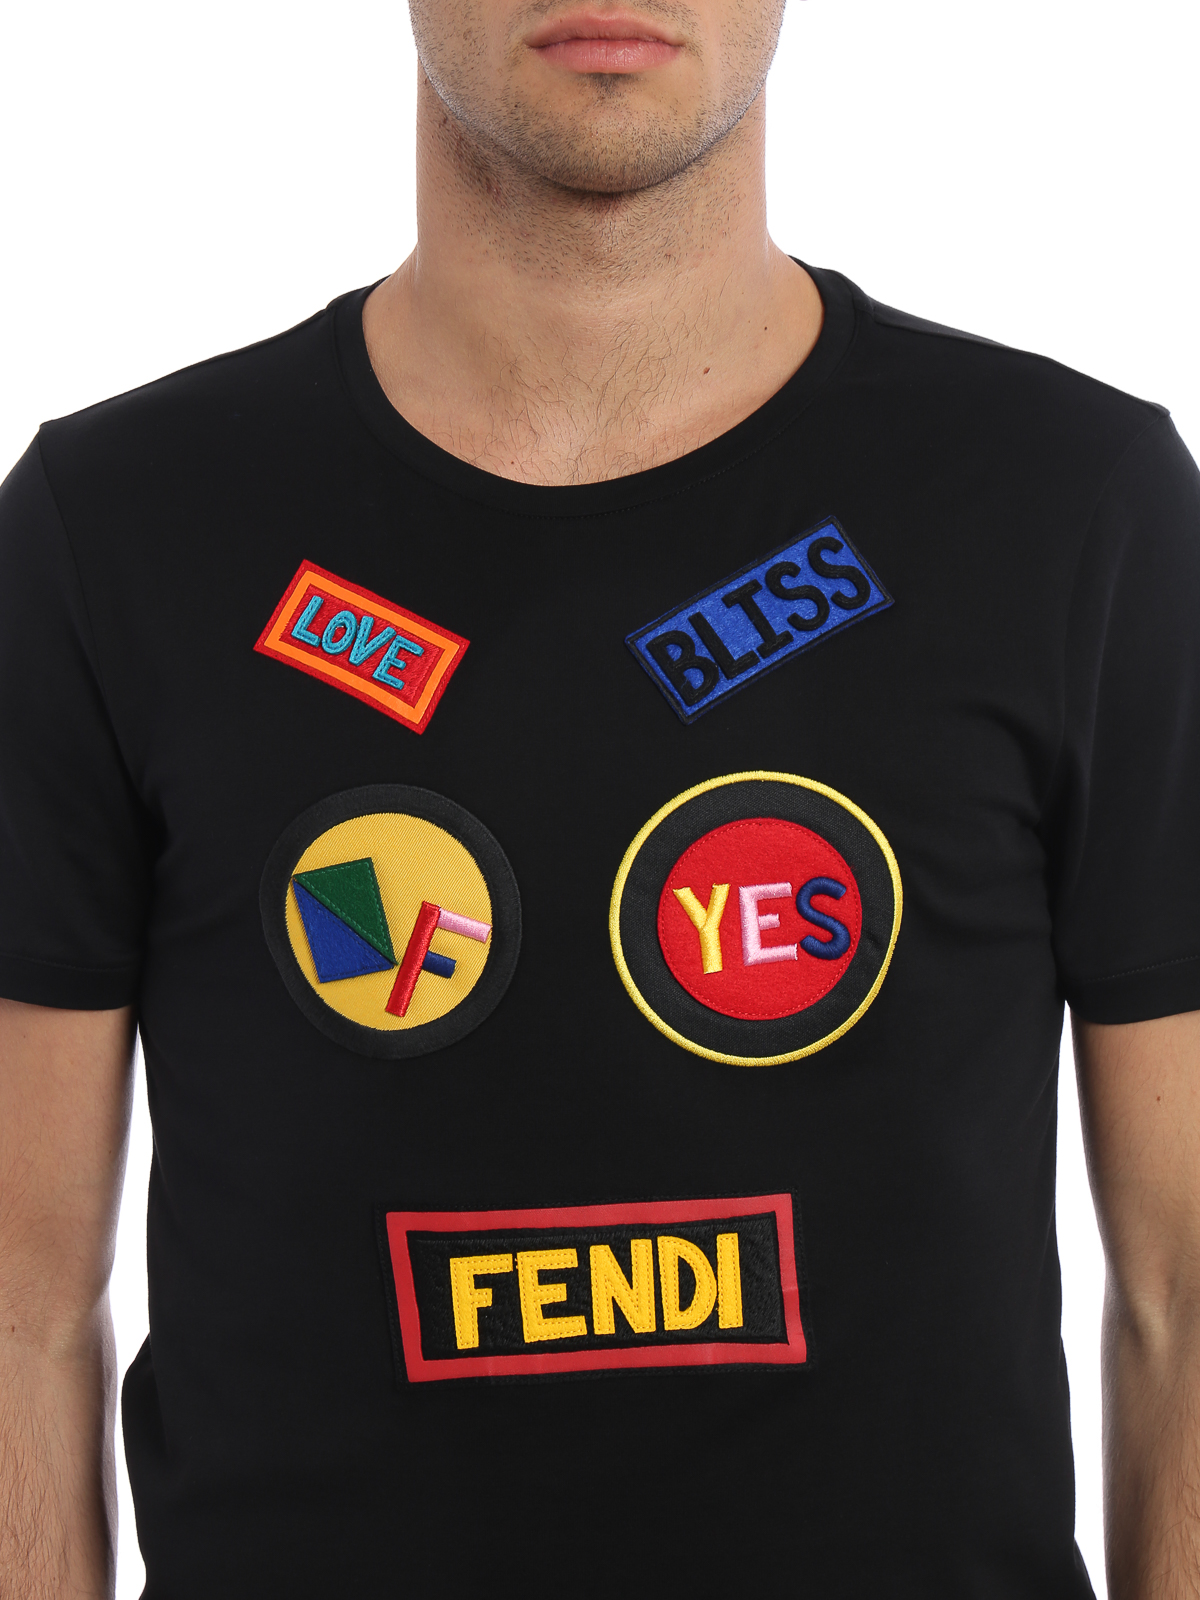 fendi love bliss t shirt